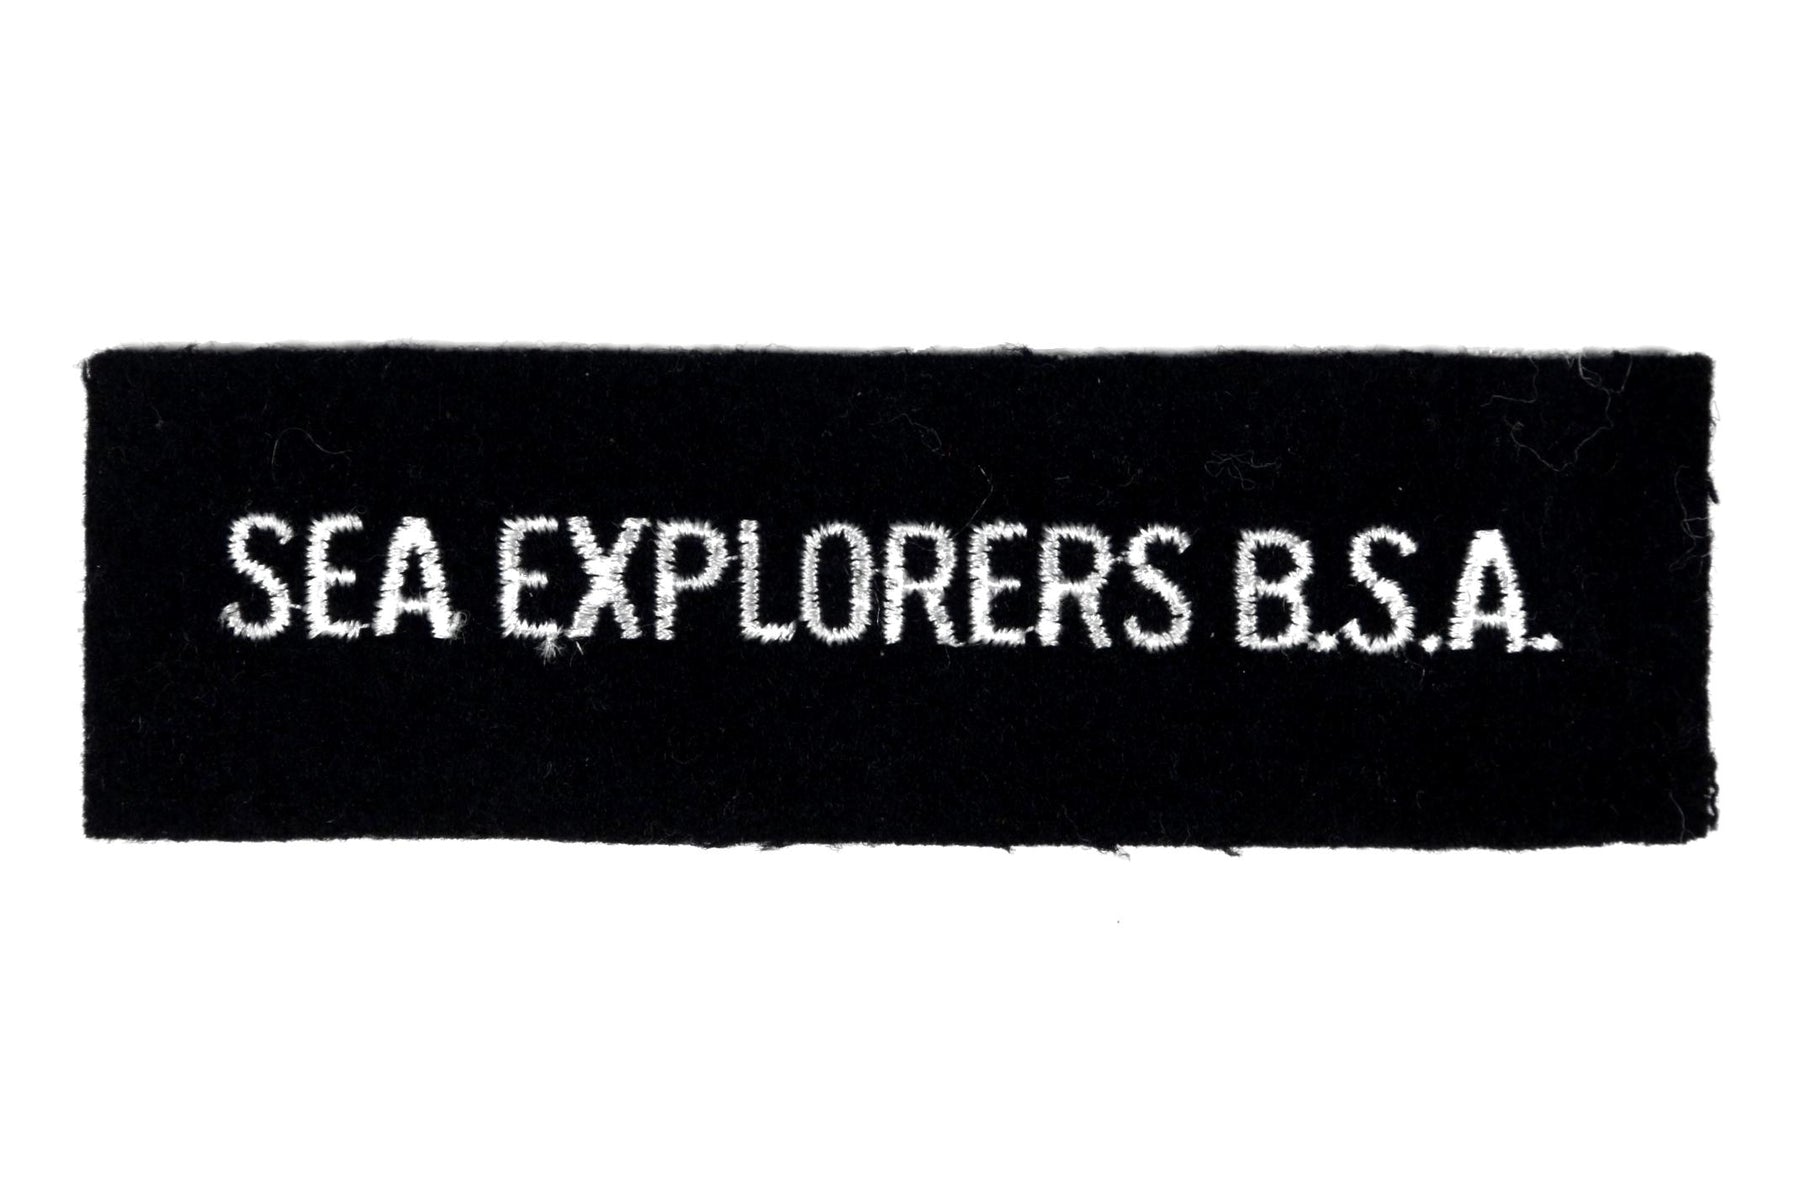 Sea Explorers B.S.A. Shirt Strip on Blue Felt